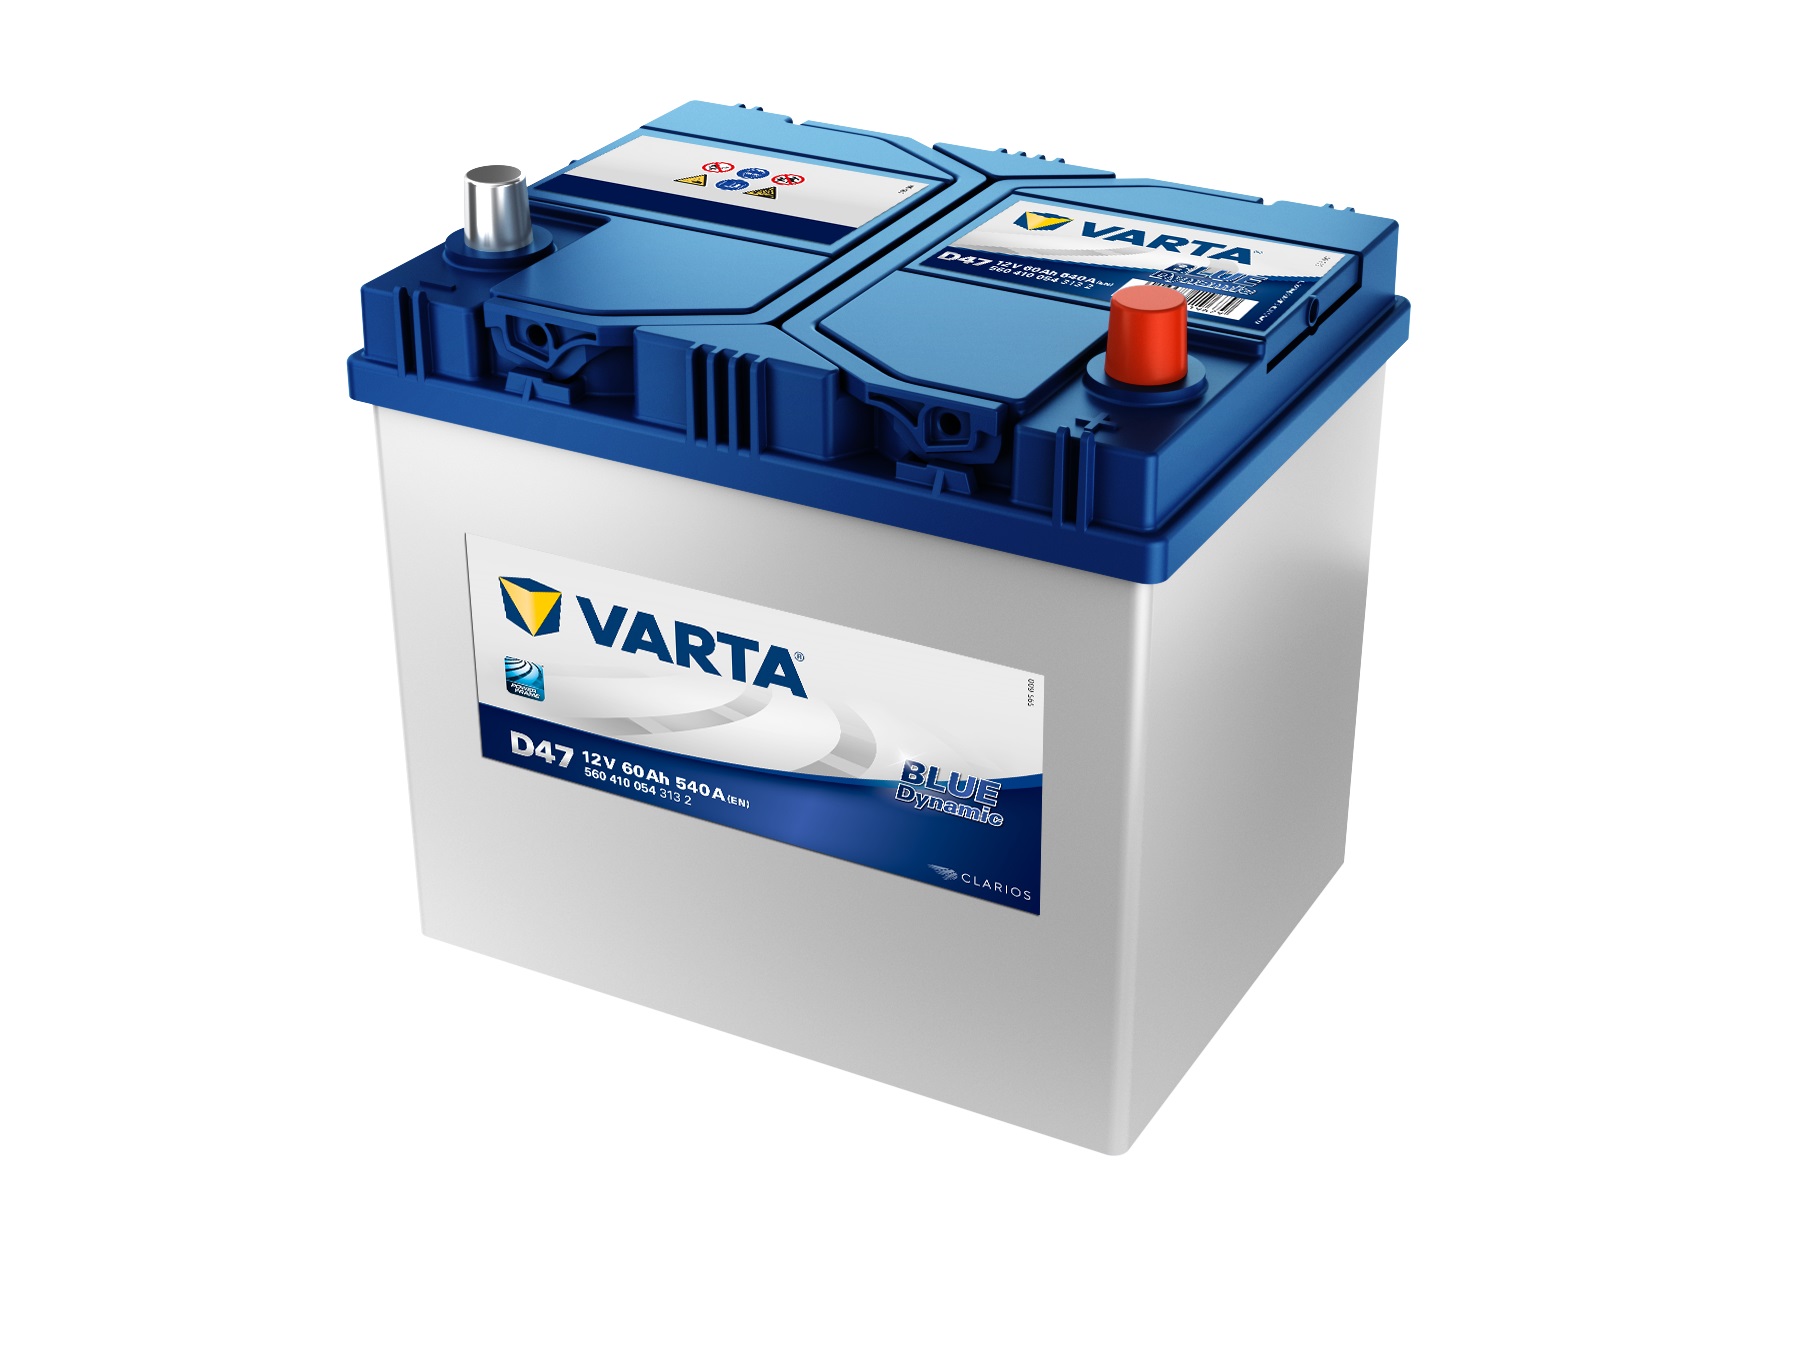 VARTA Blue Dynamic Autobatterie, D47, 5604100543, 60 Ah, 540 A von Varta